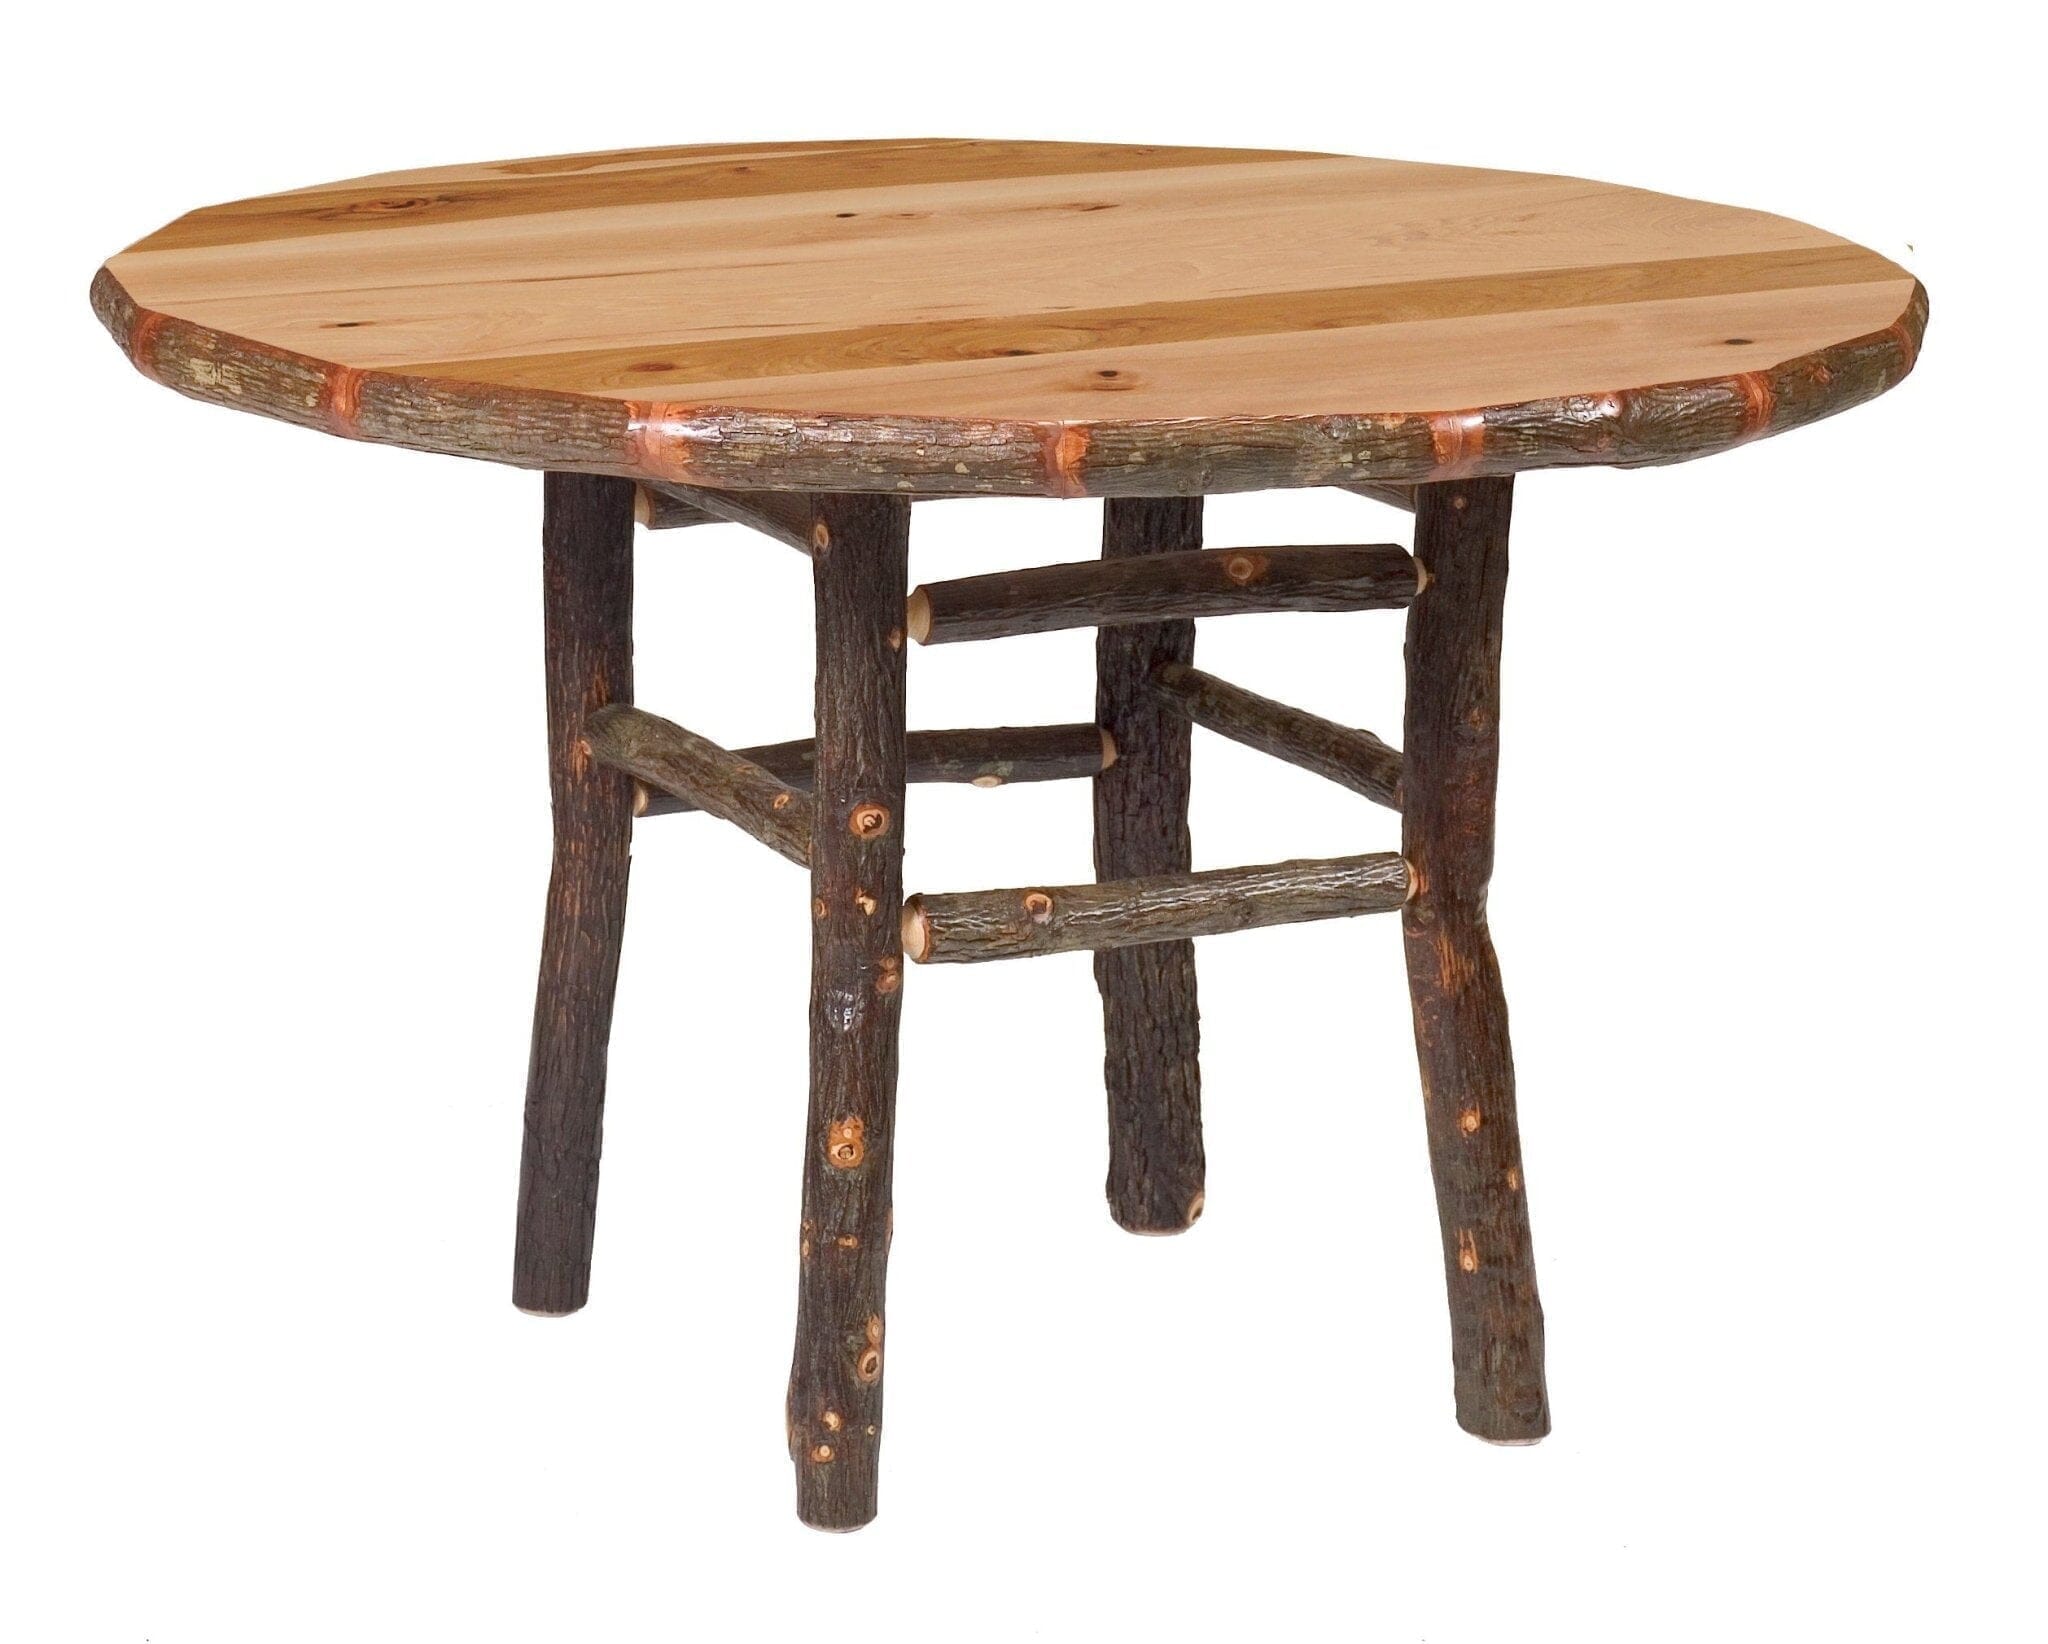 rustic log tables